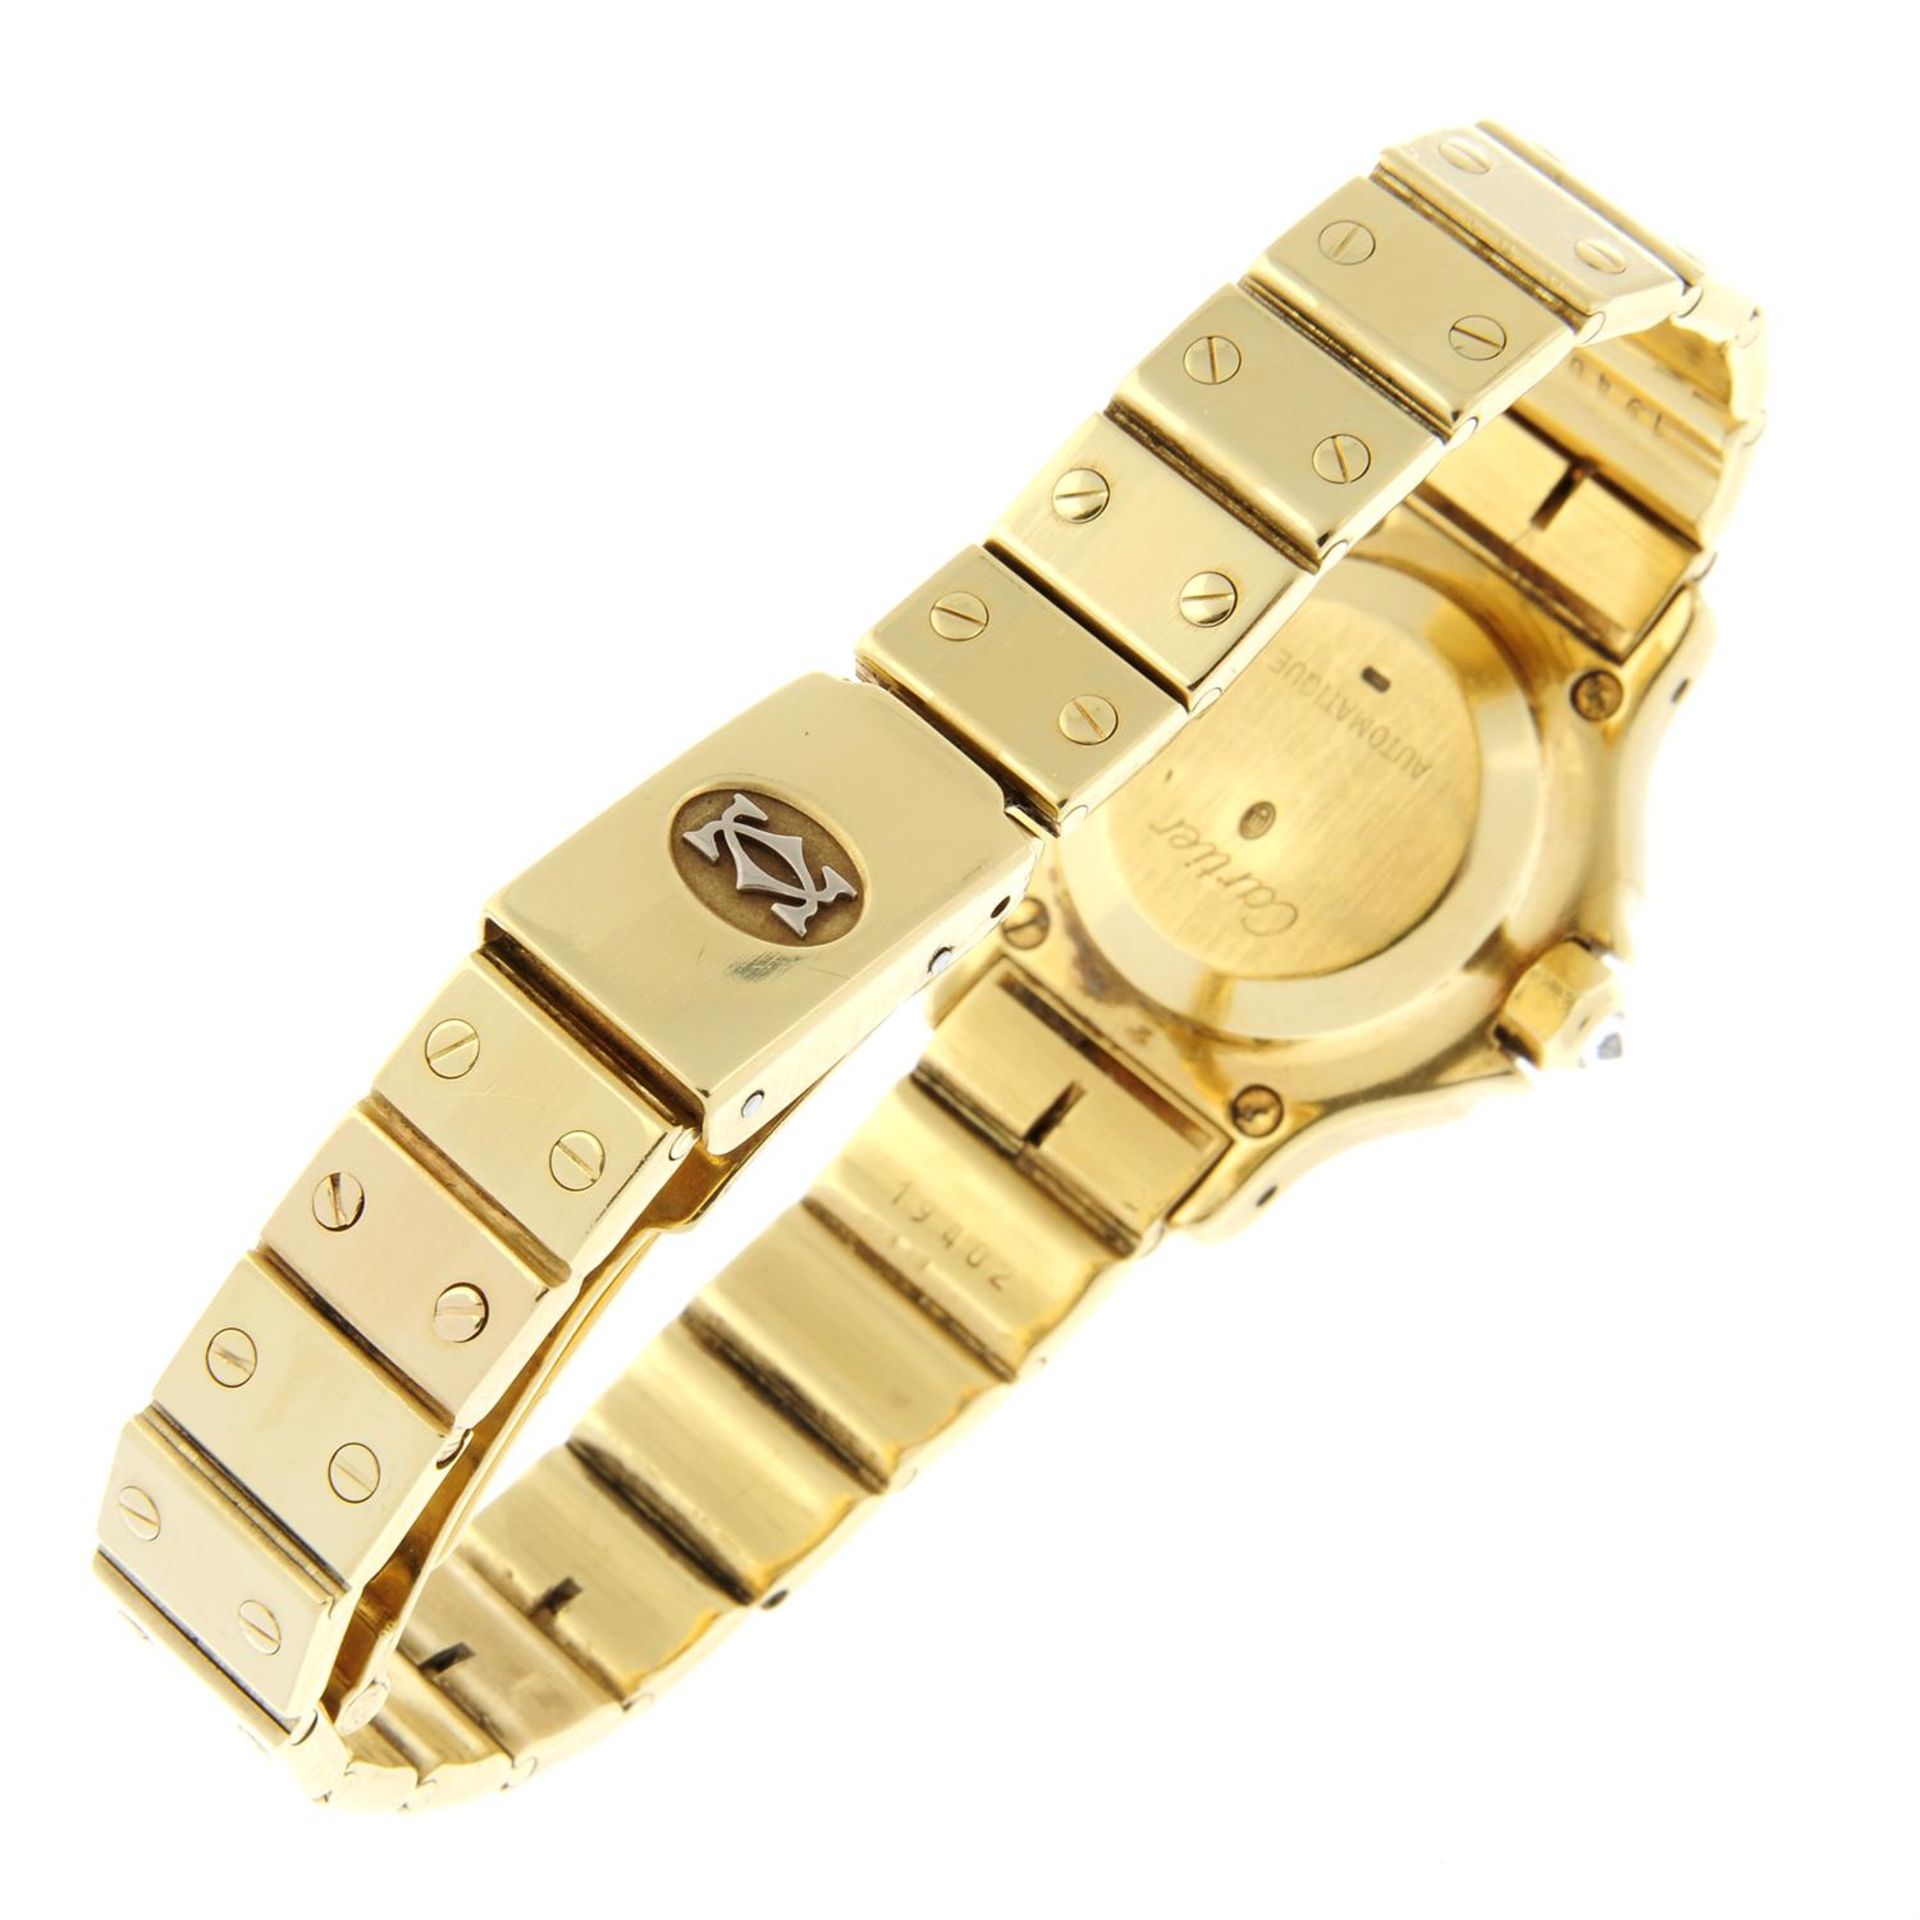 CARTIER - an 18ct yellow gold Santos Octagon bracelet watch, 24mm. - Image 2 of 7